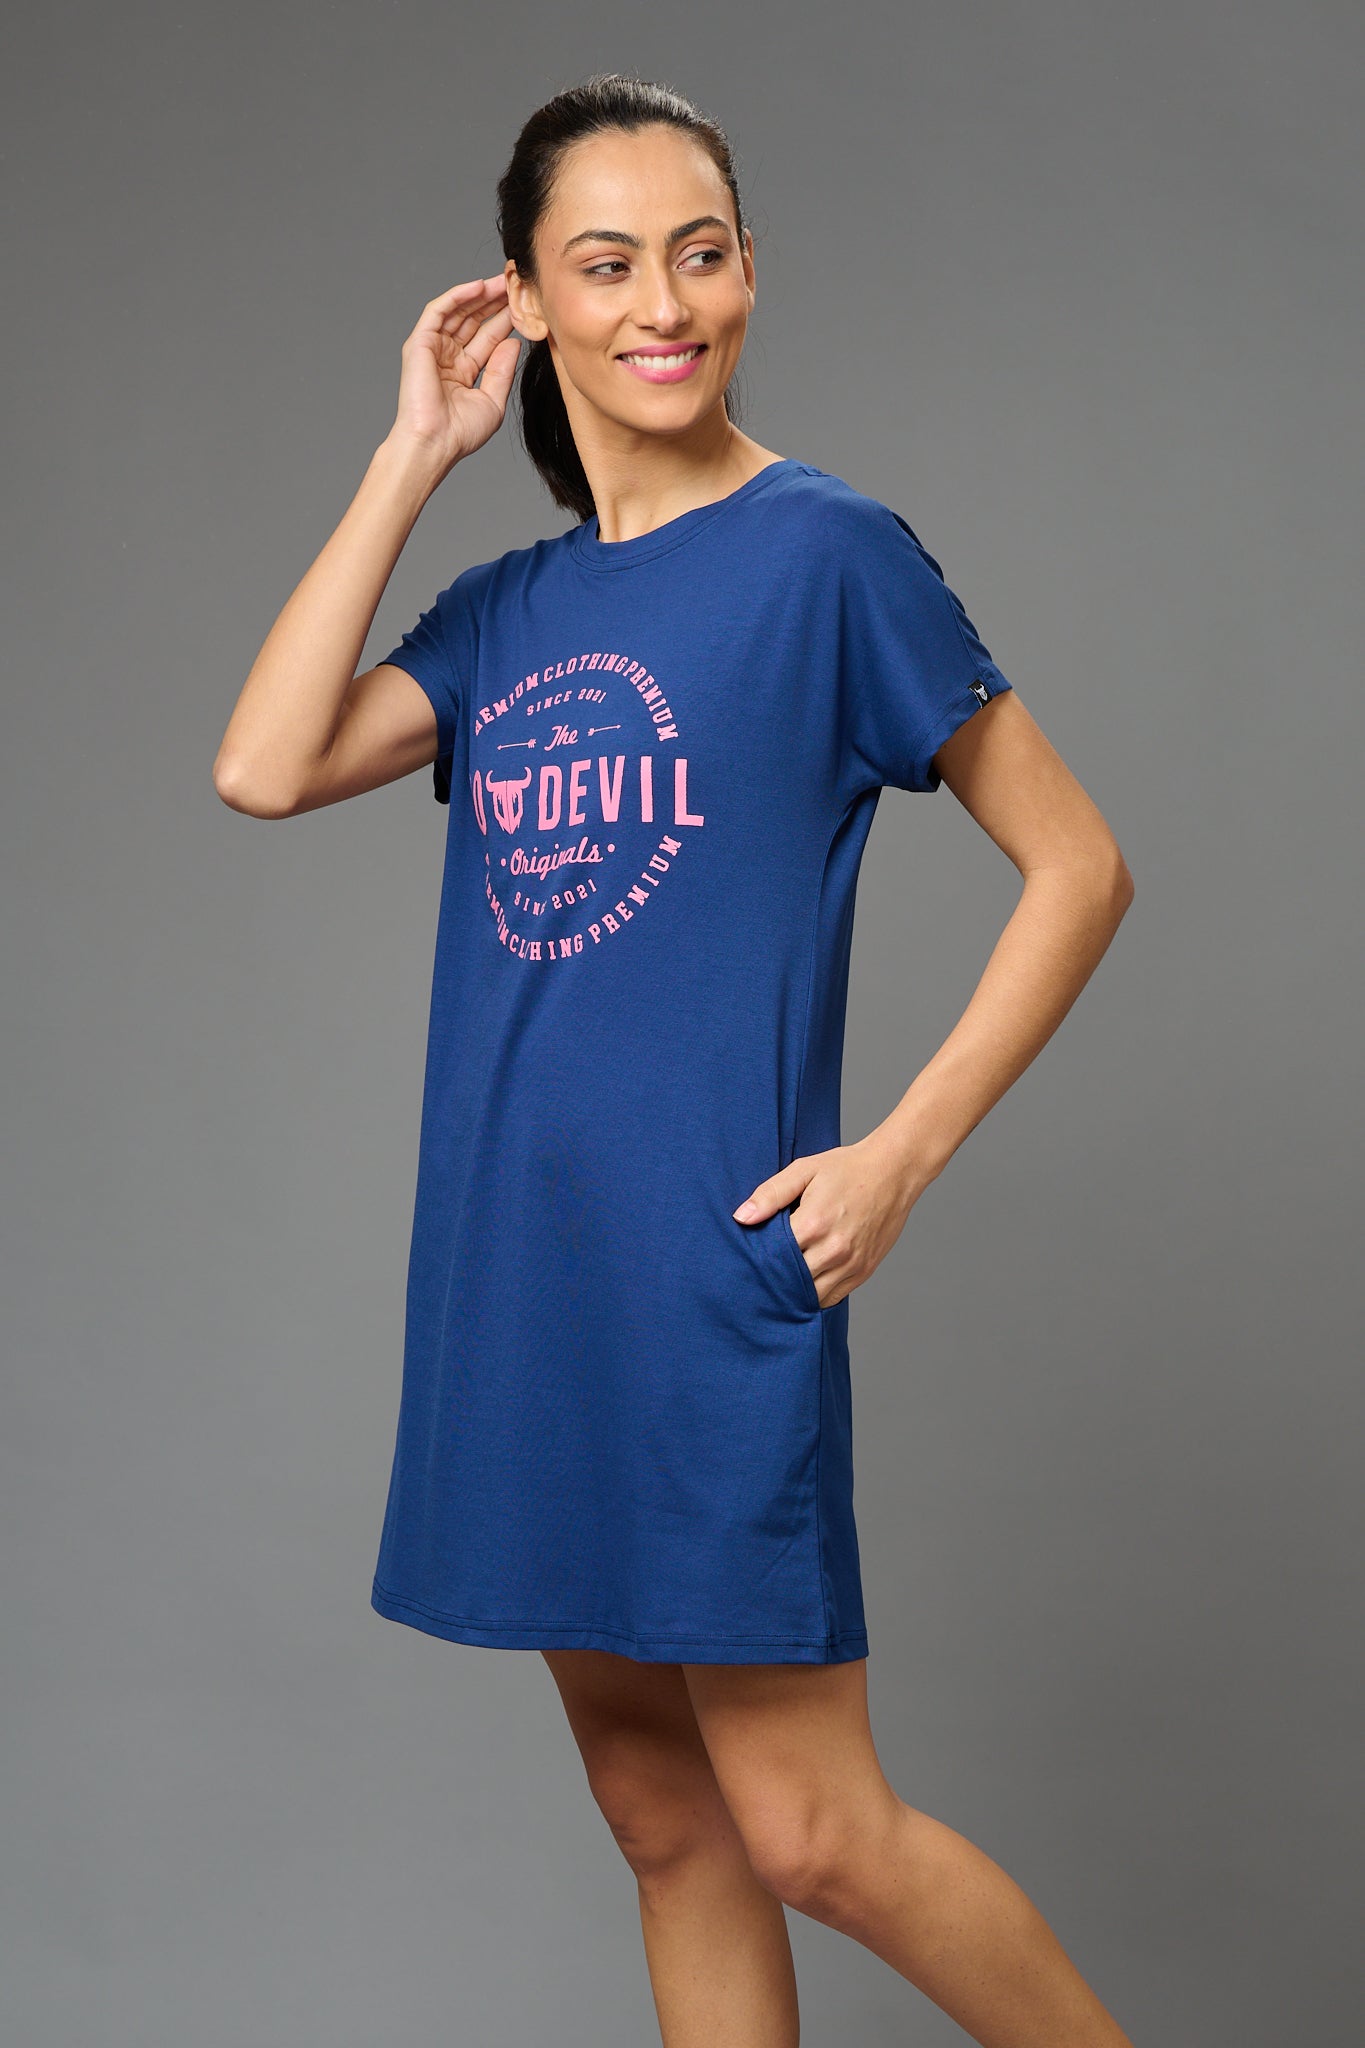 Go Devil Stamp Printed Blue Dress for Women - Go Devil